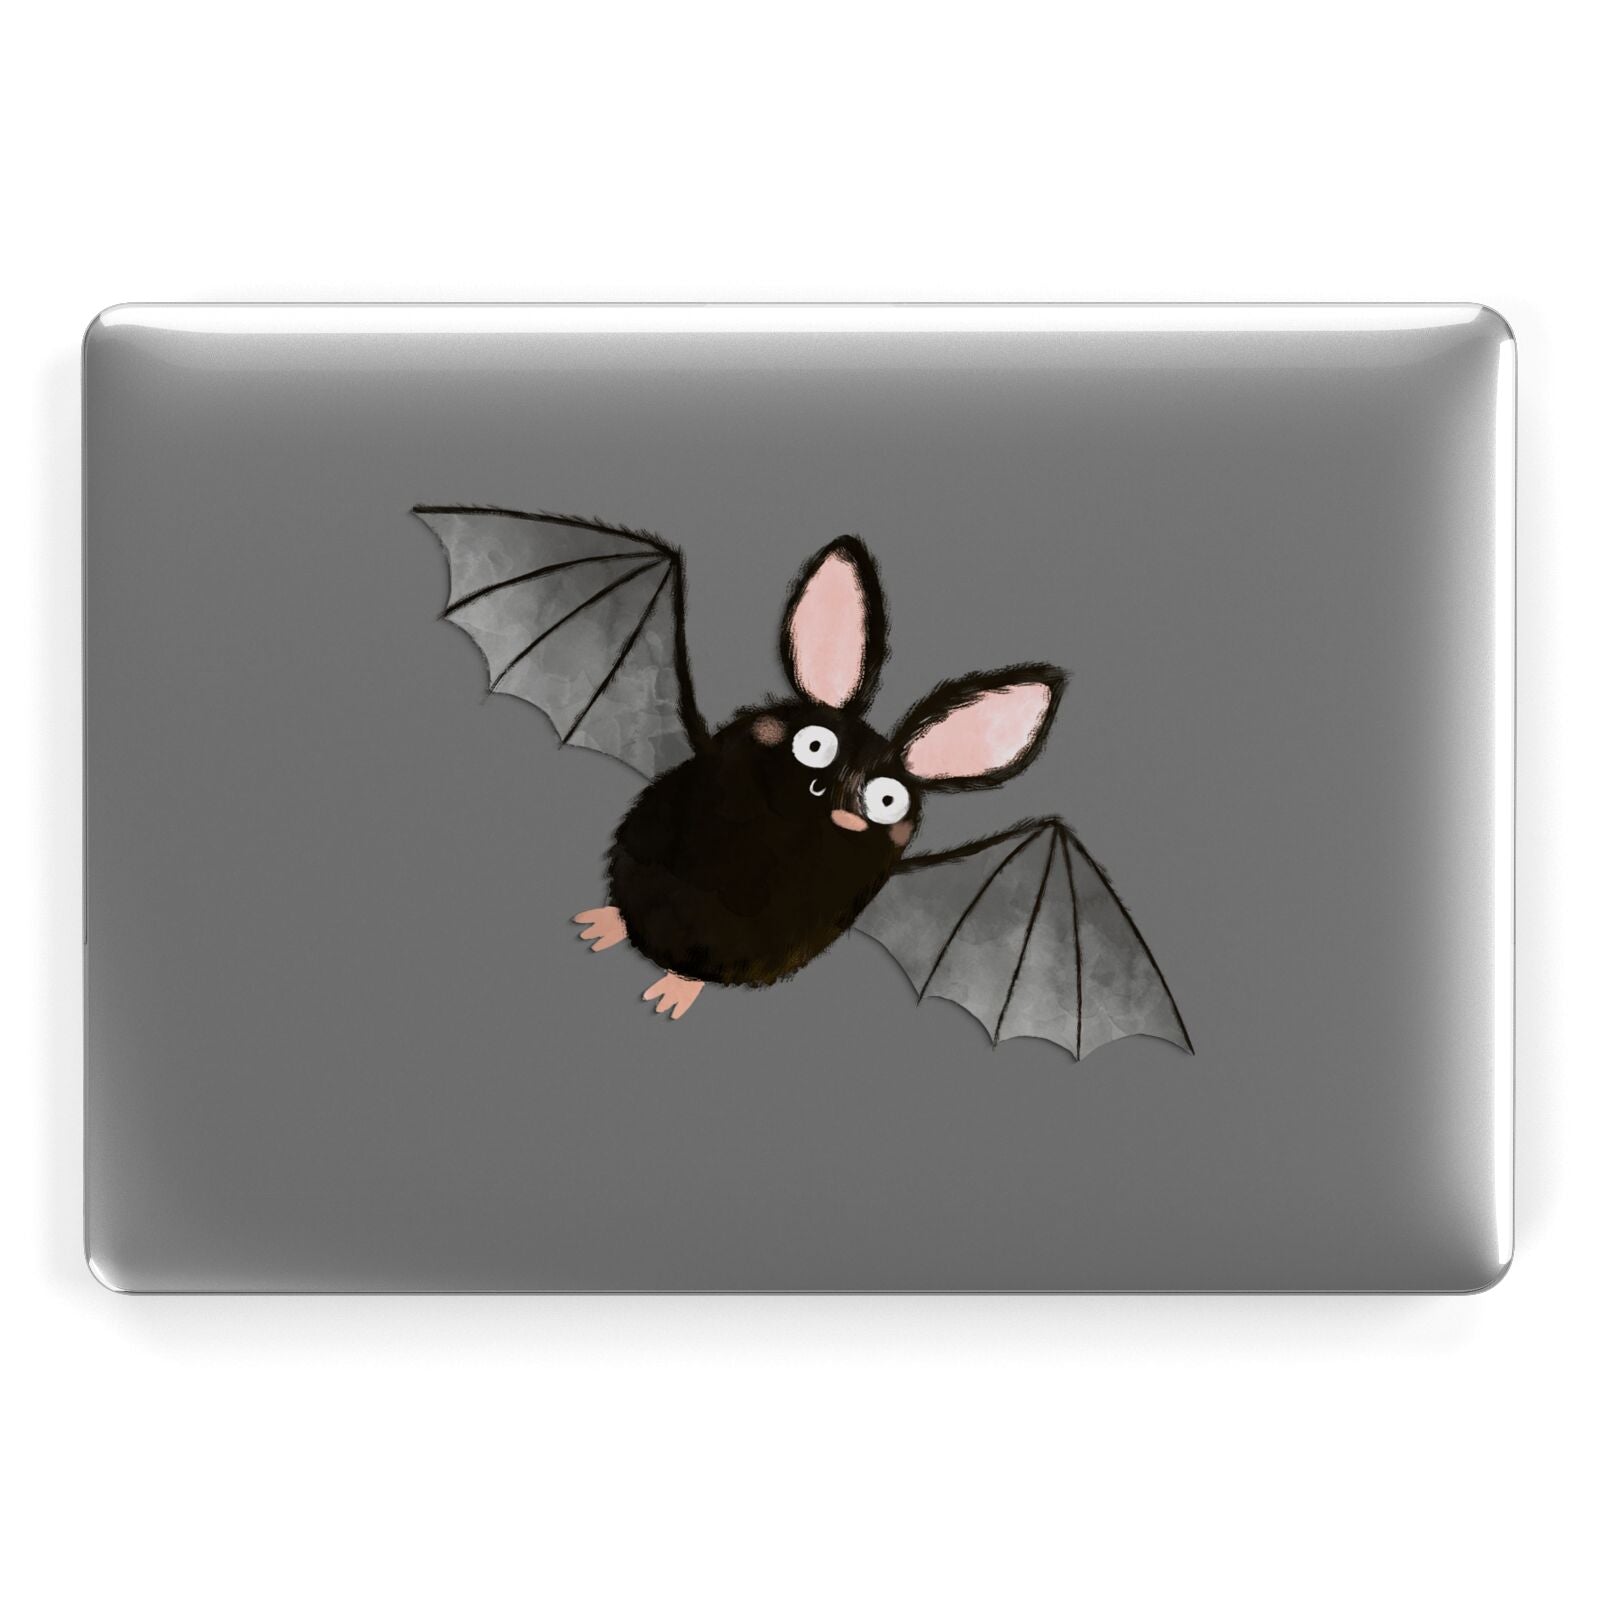 Bat Illustration Apple MacBook Case